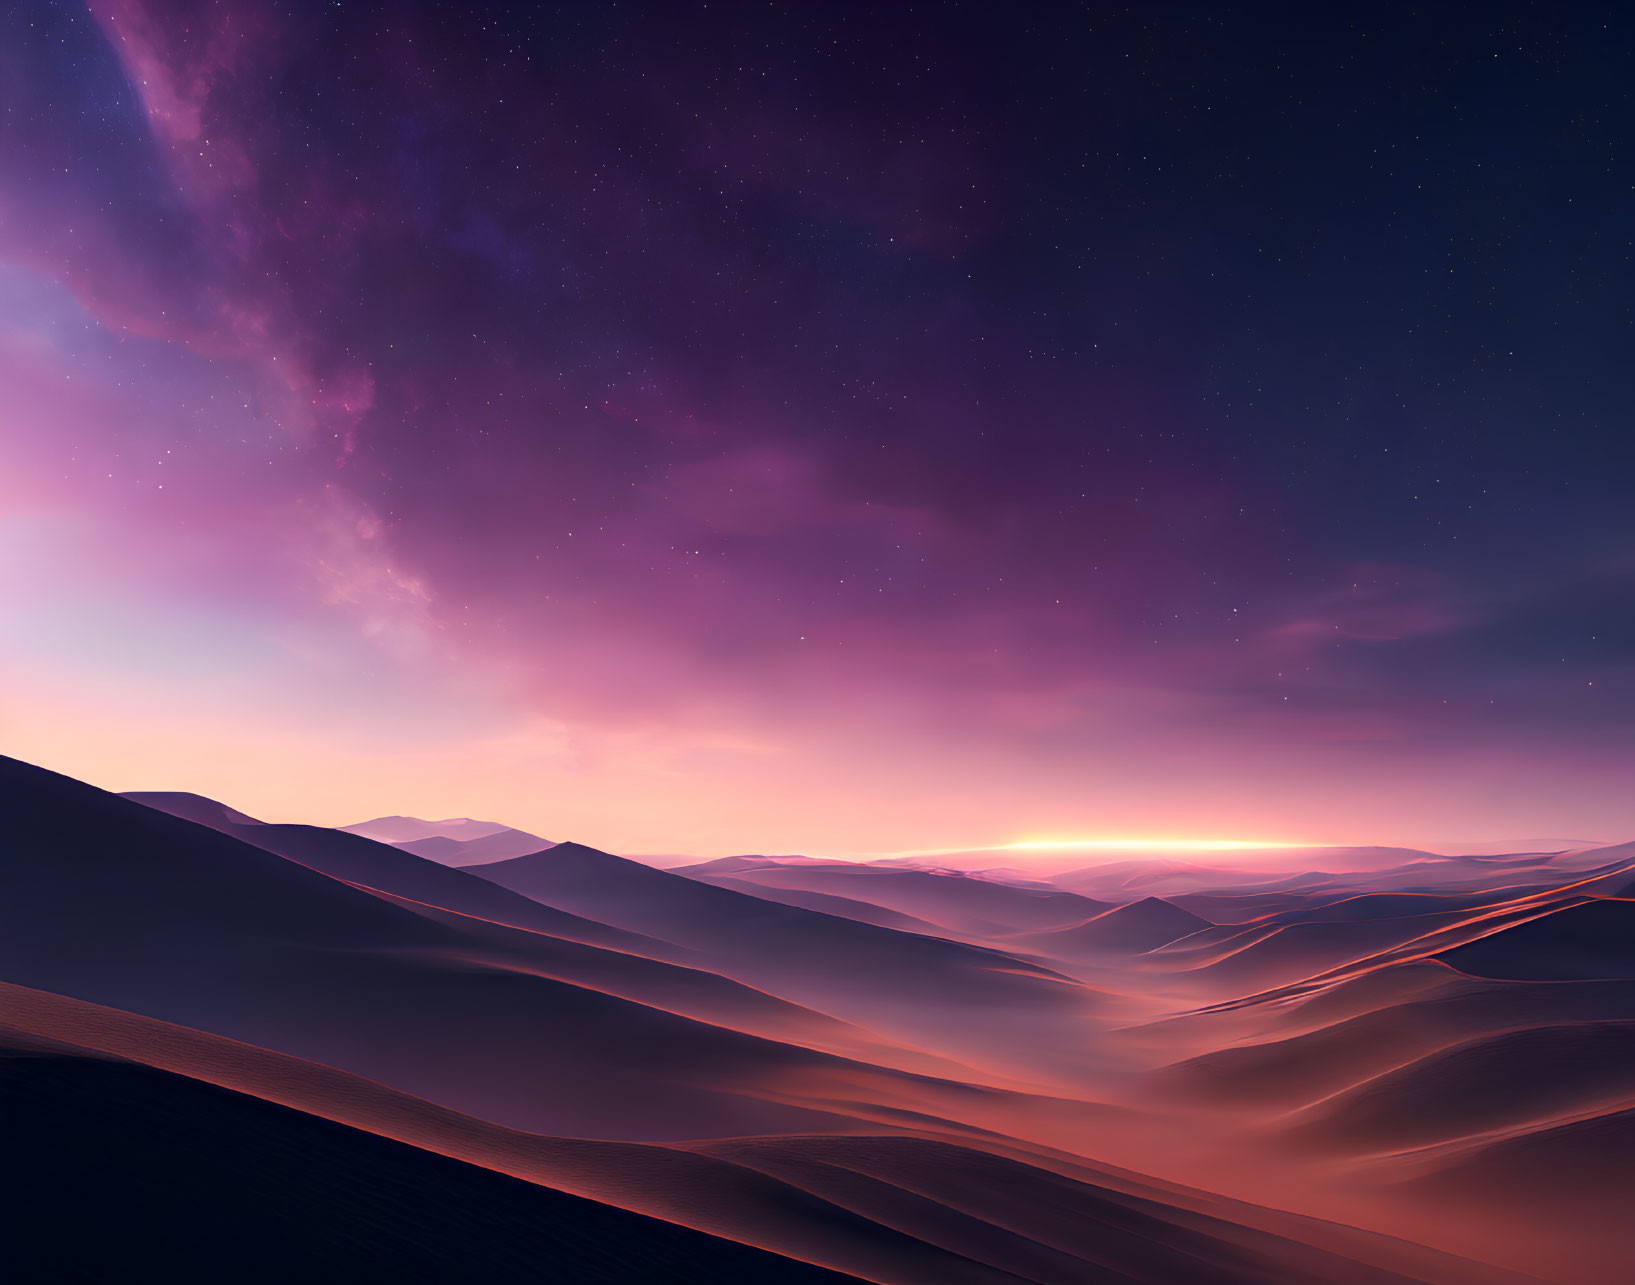 Starry night landscape with sand dunes under purple sky